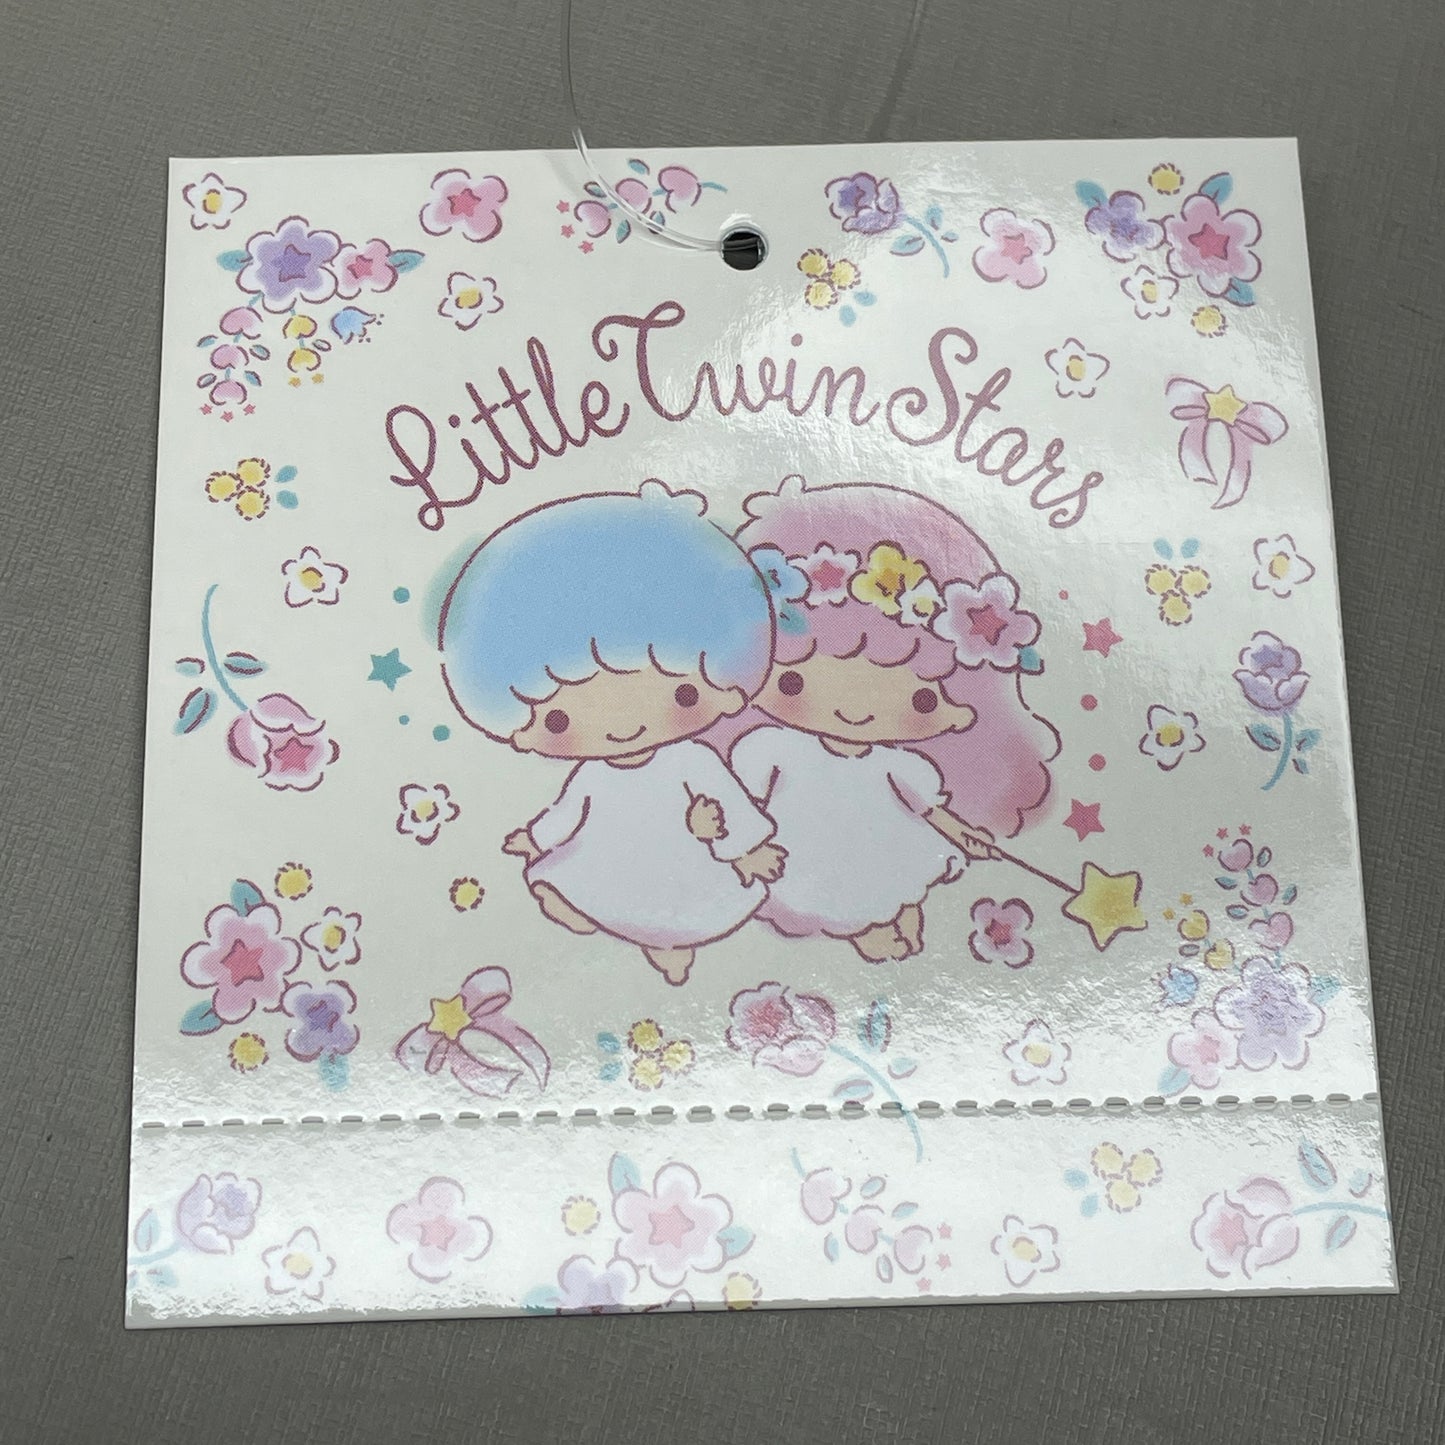 SANRIO Original LittleTwinStars Single Loop Produce Bag Pink Floral Frill Ft. Kiki & Lala